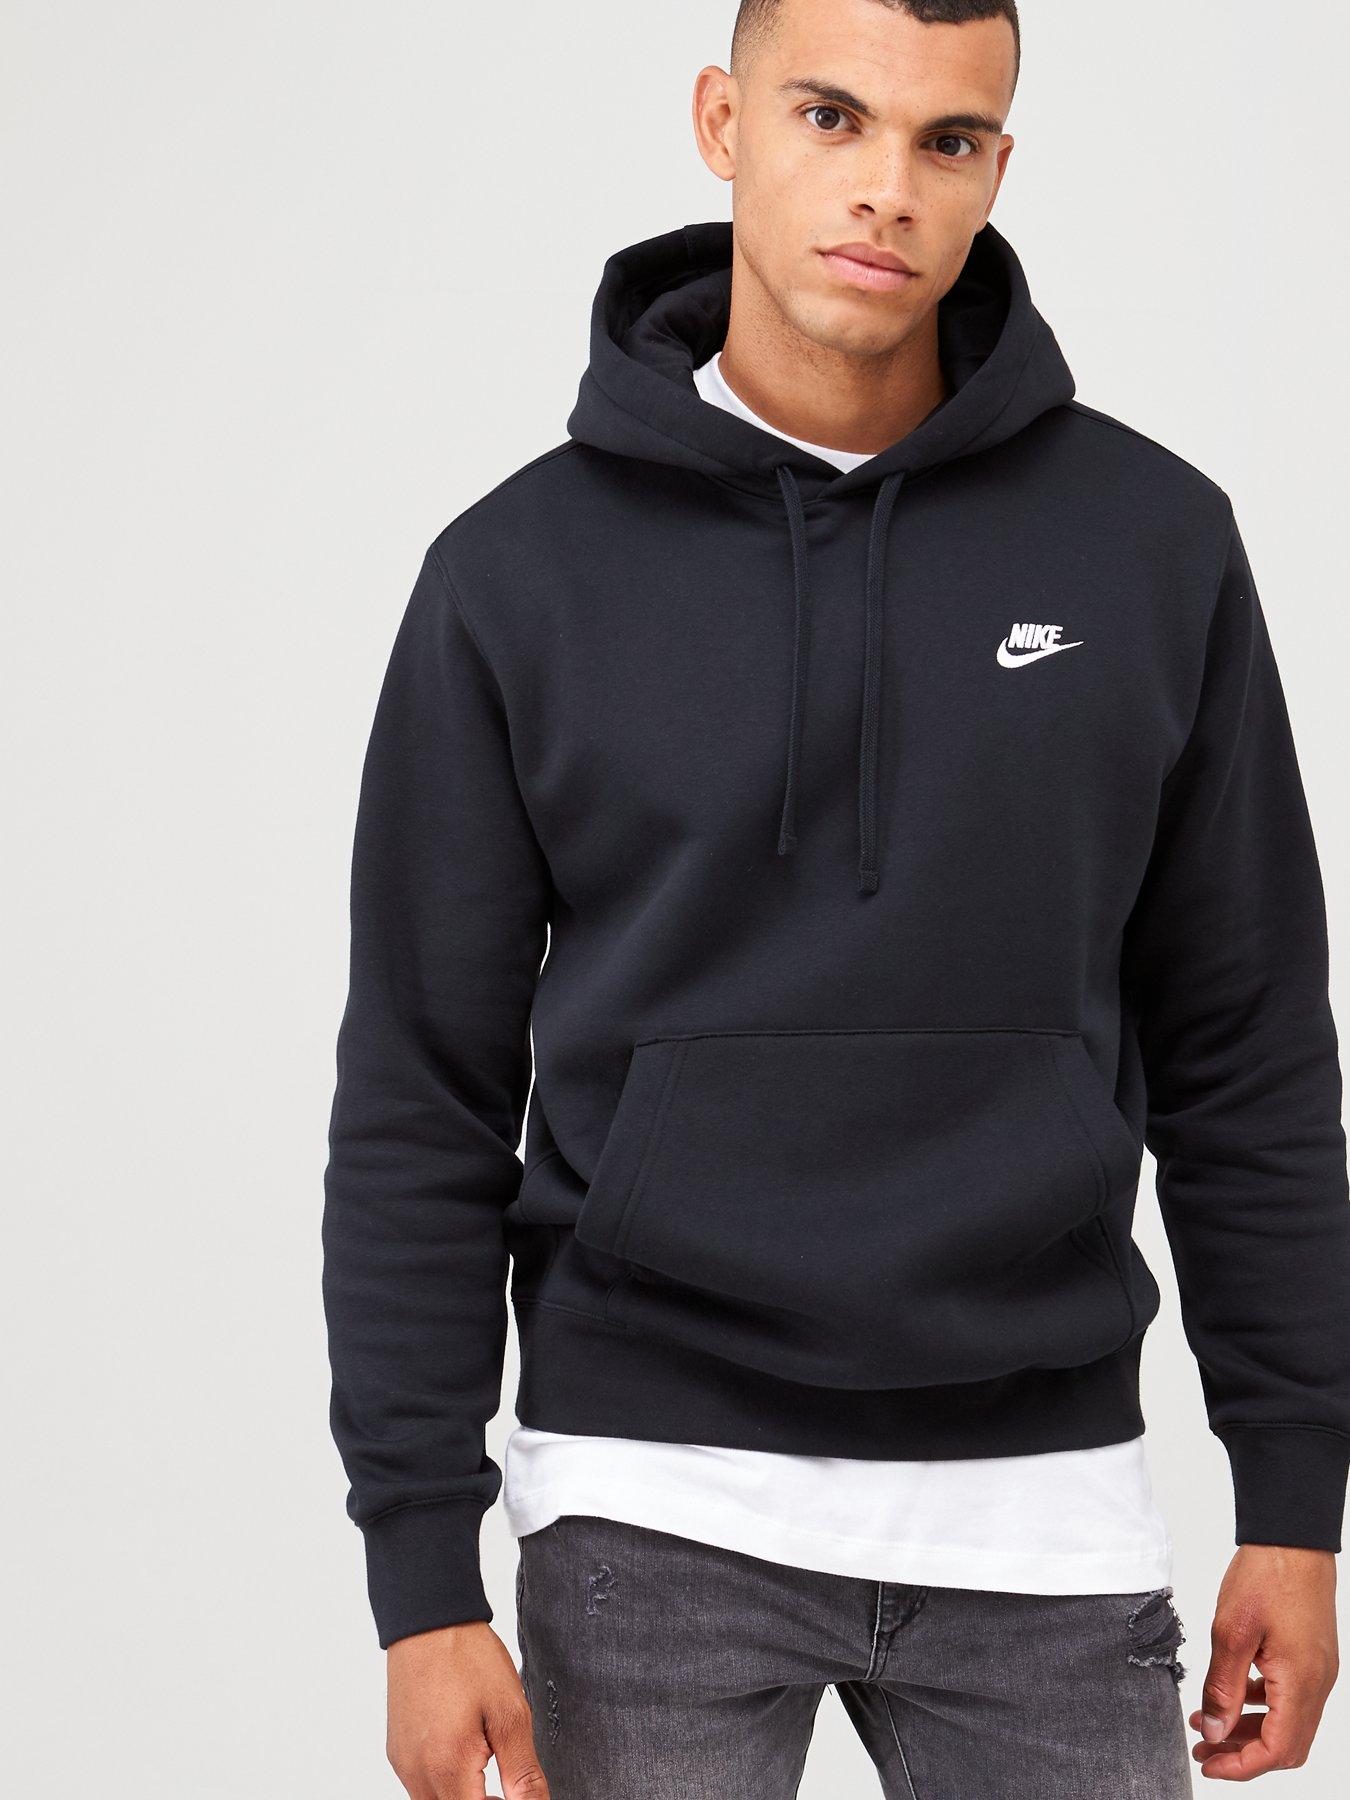 Nike Men's Hoodies & Sweatshirts | Ireland